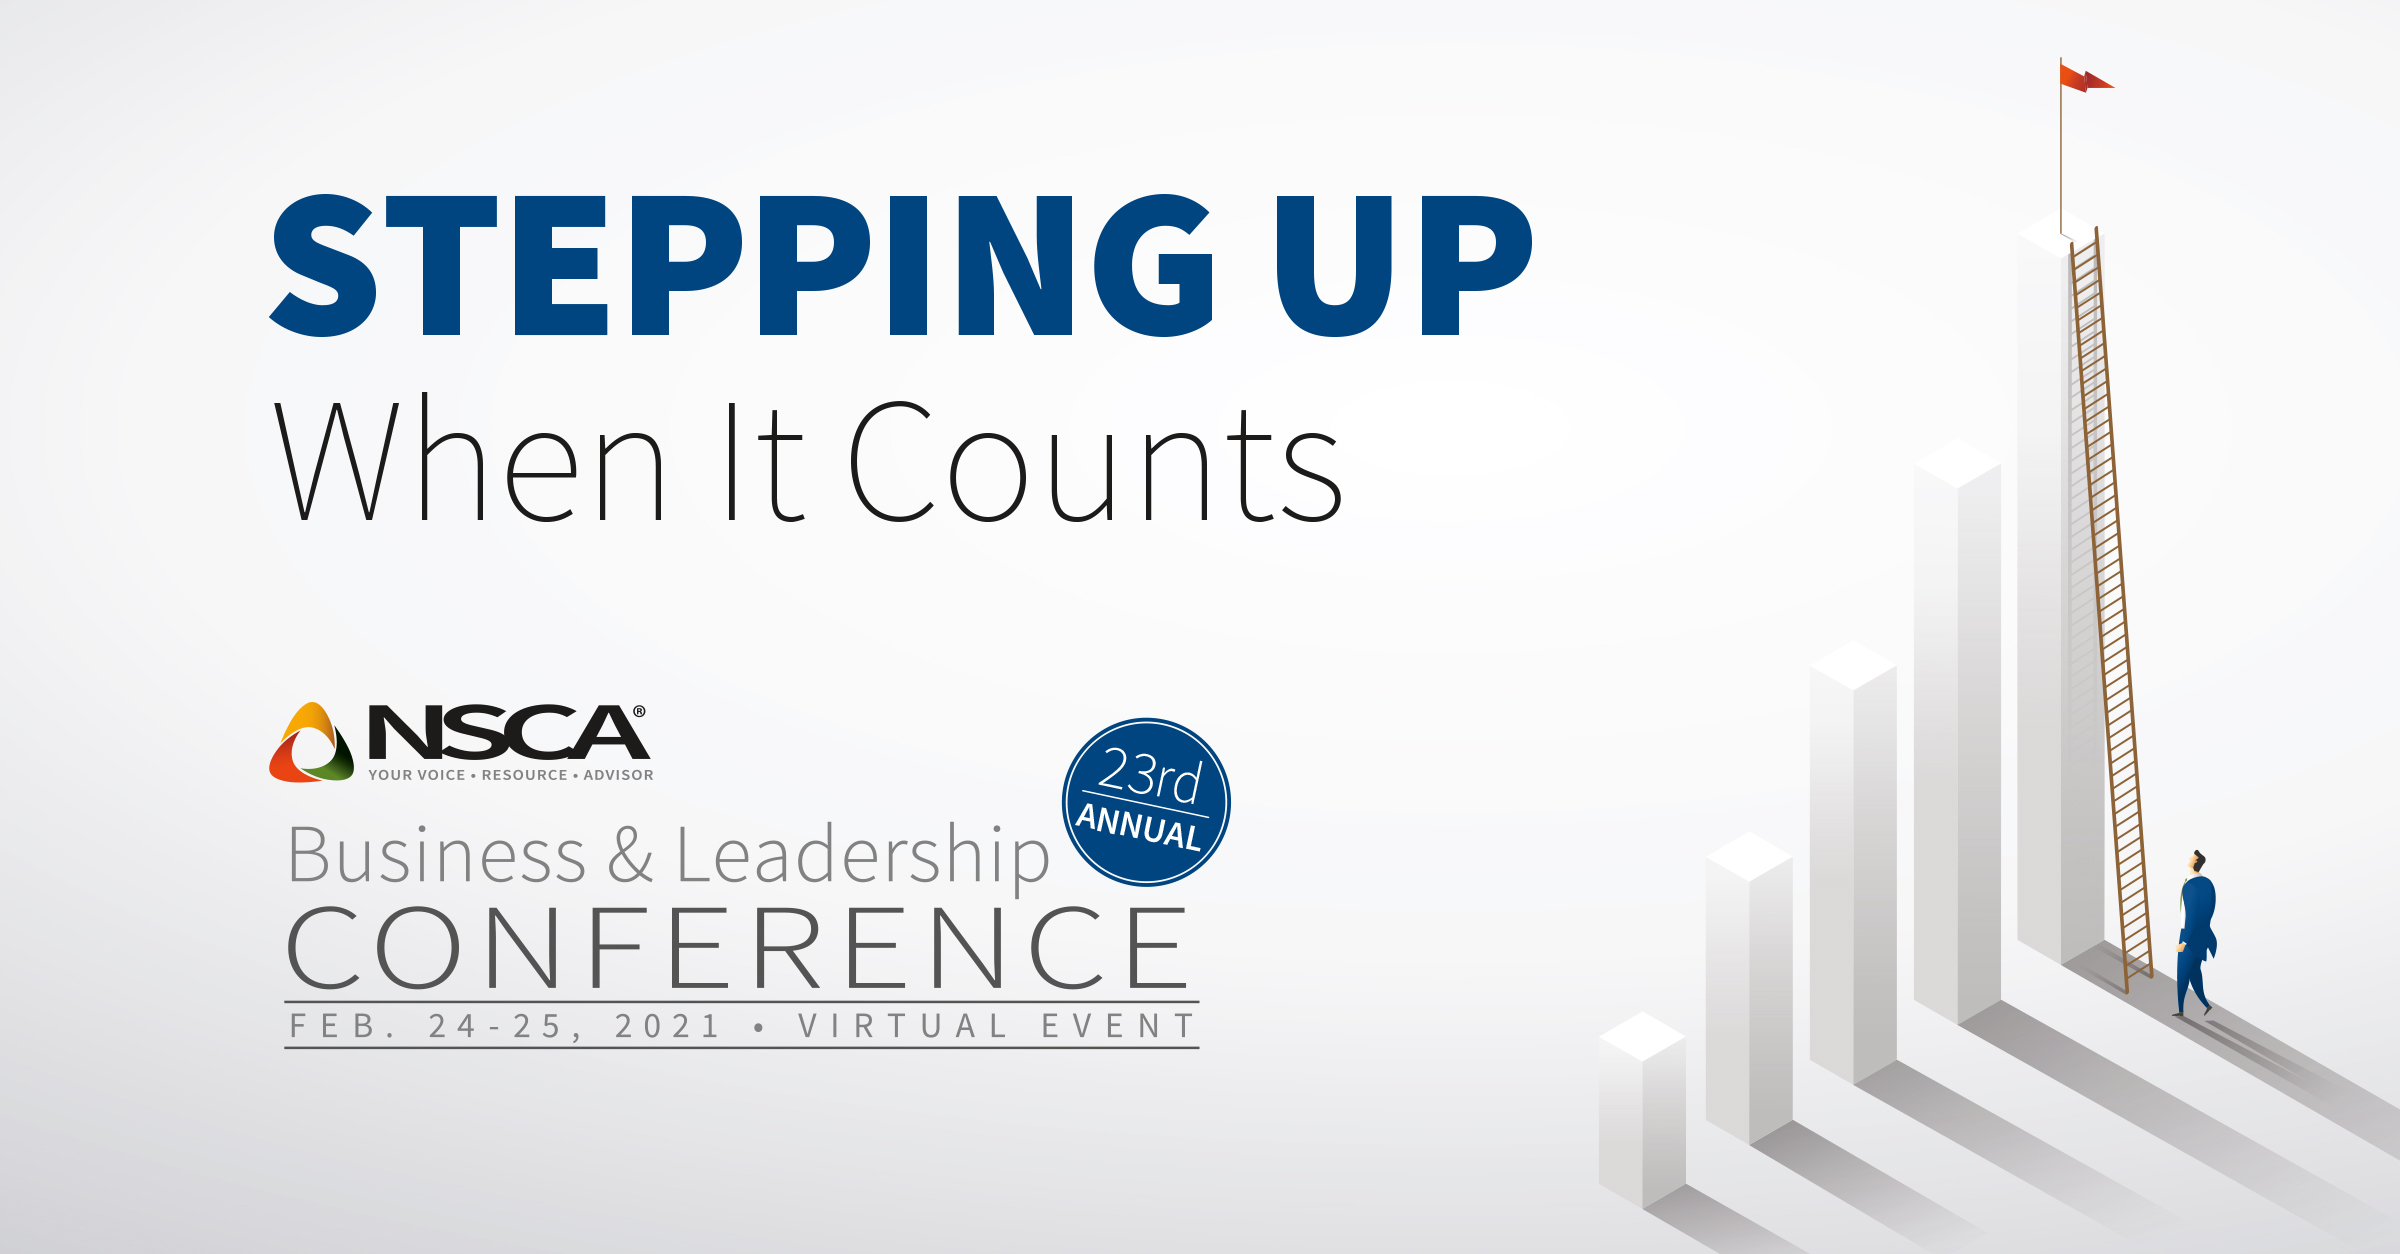 Business & Leadership Conference 2021 header